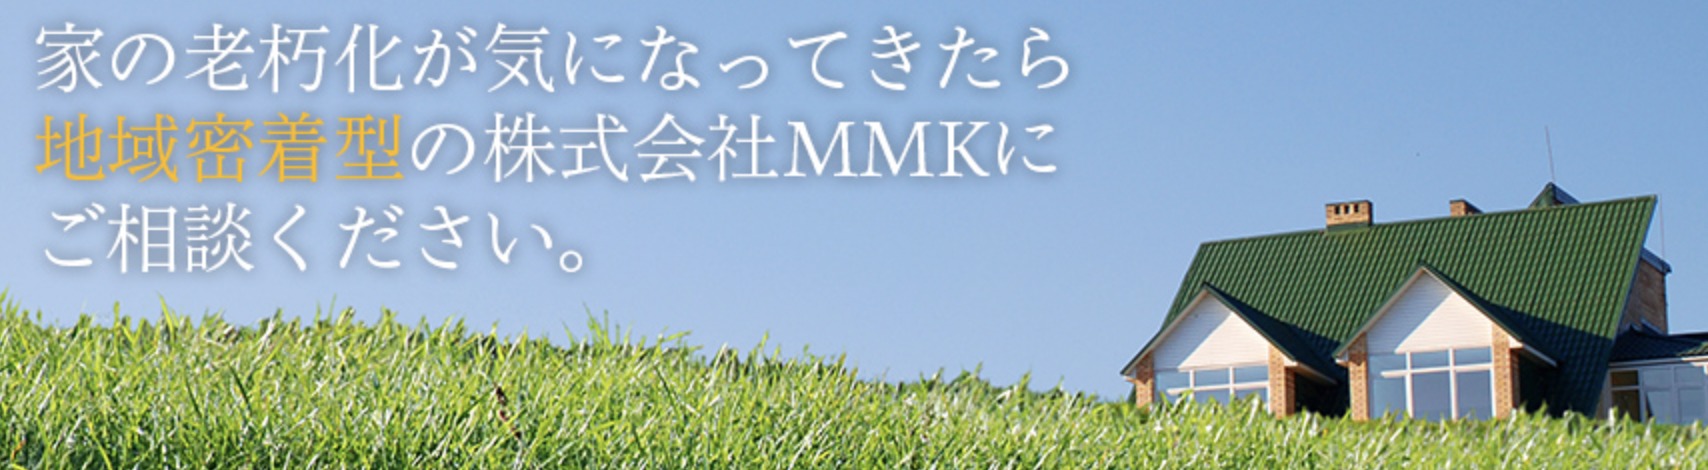 MMK株式会社